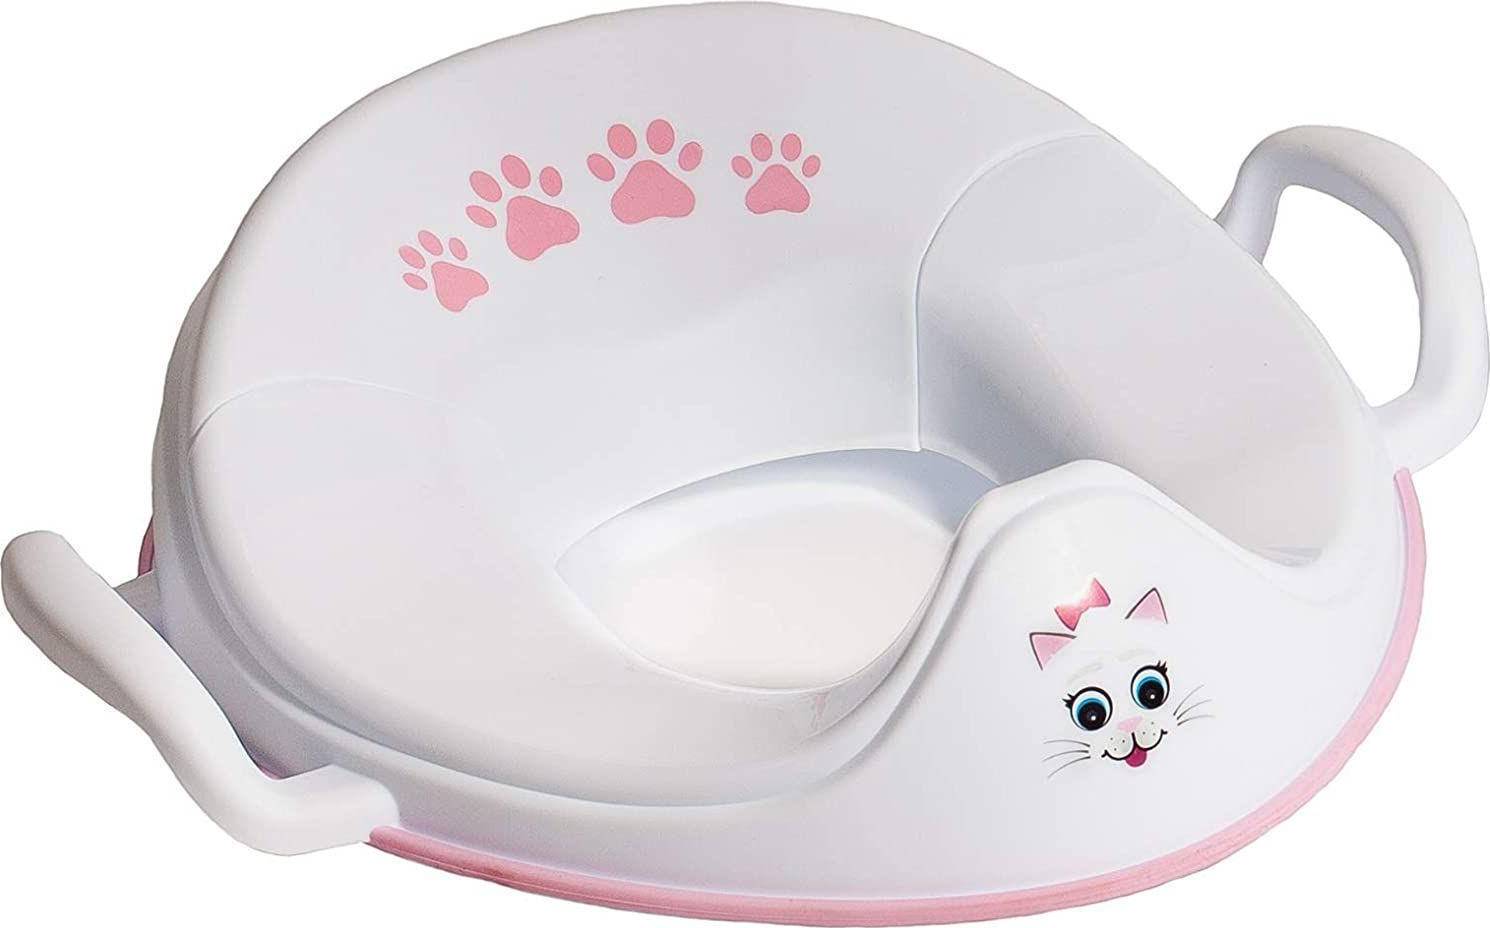  Bild på My Carry Potty My Little Cat Trainer Seat toasits för barn